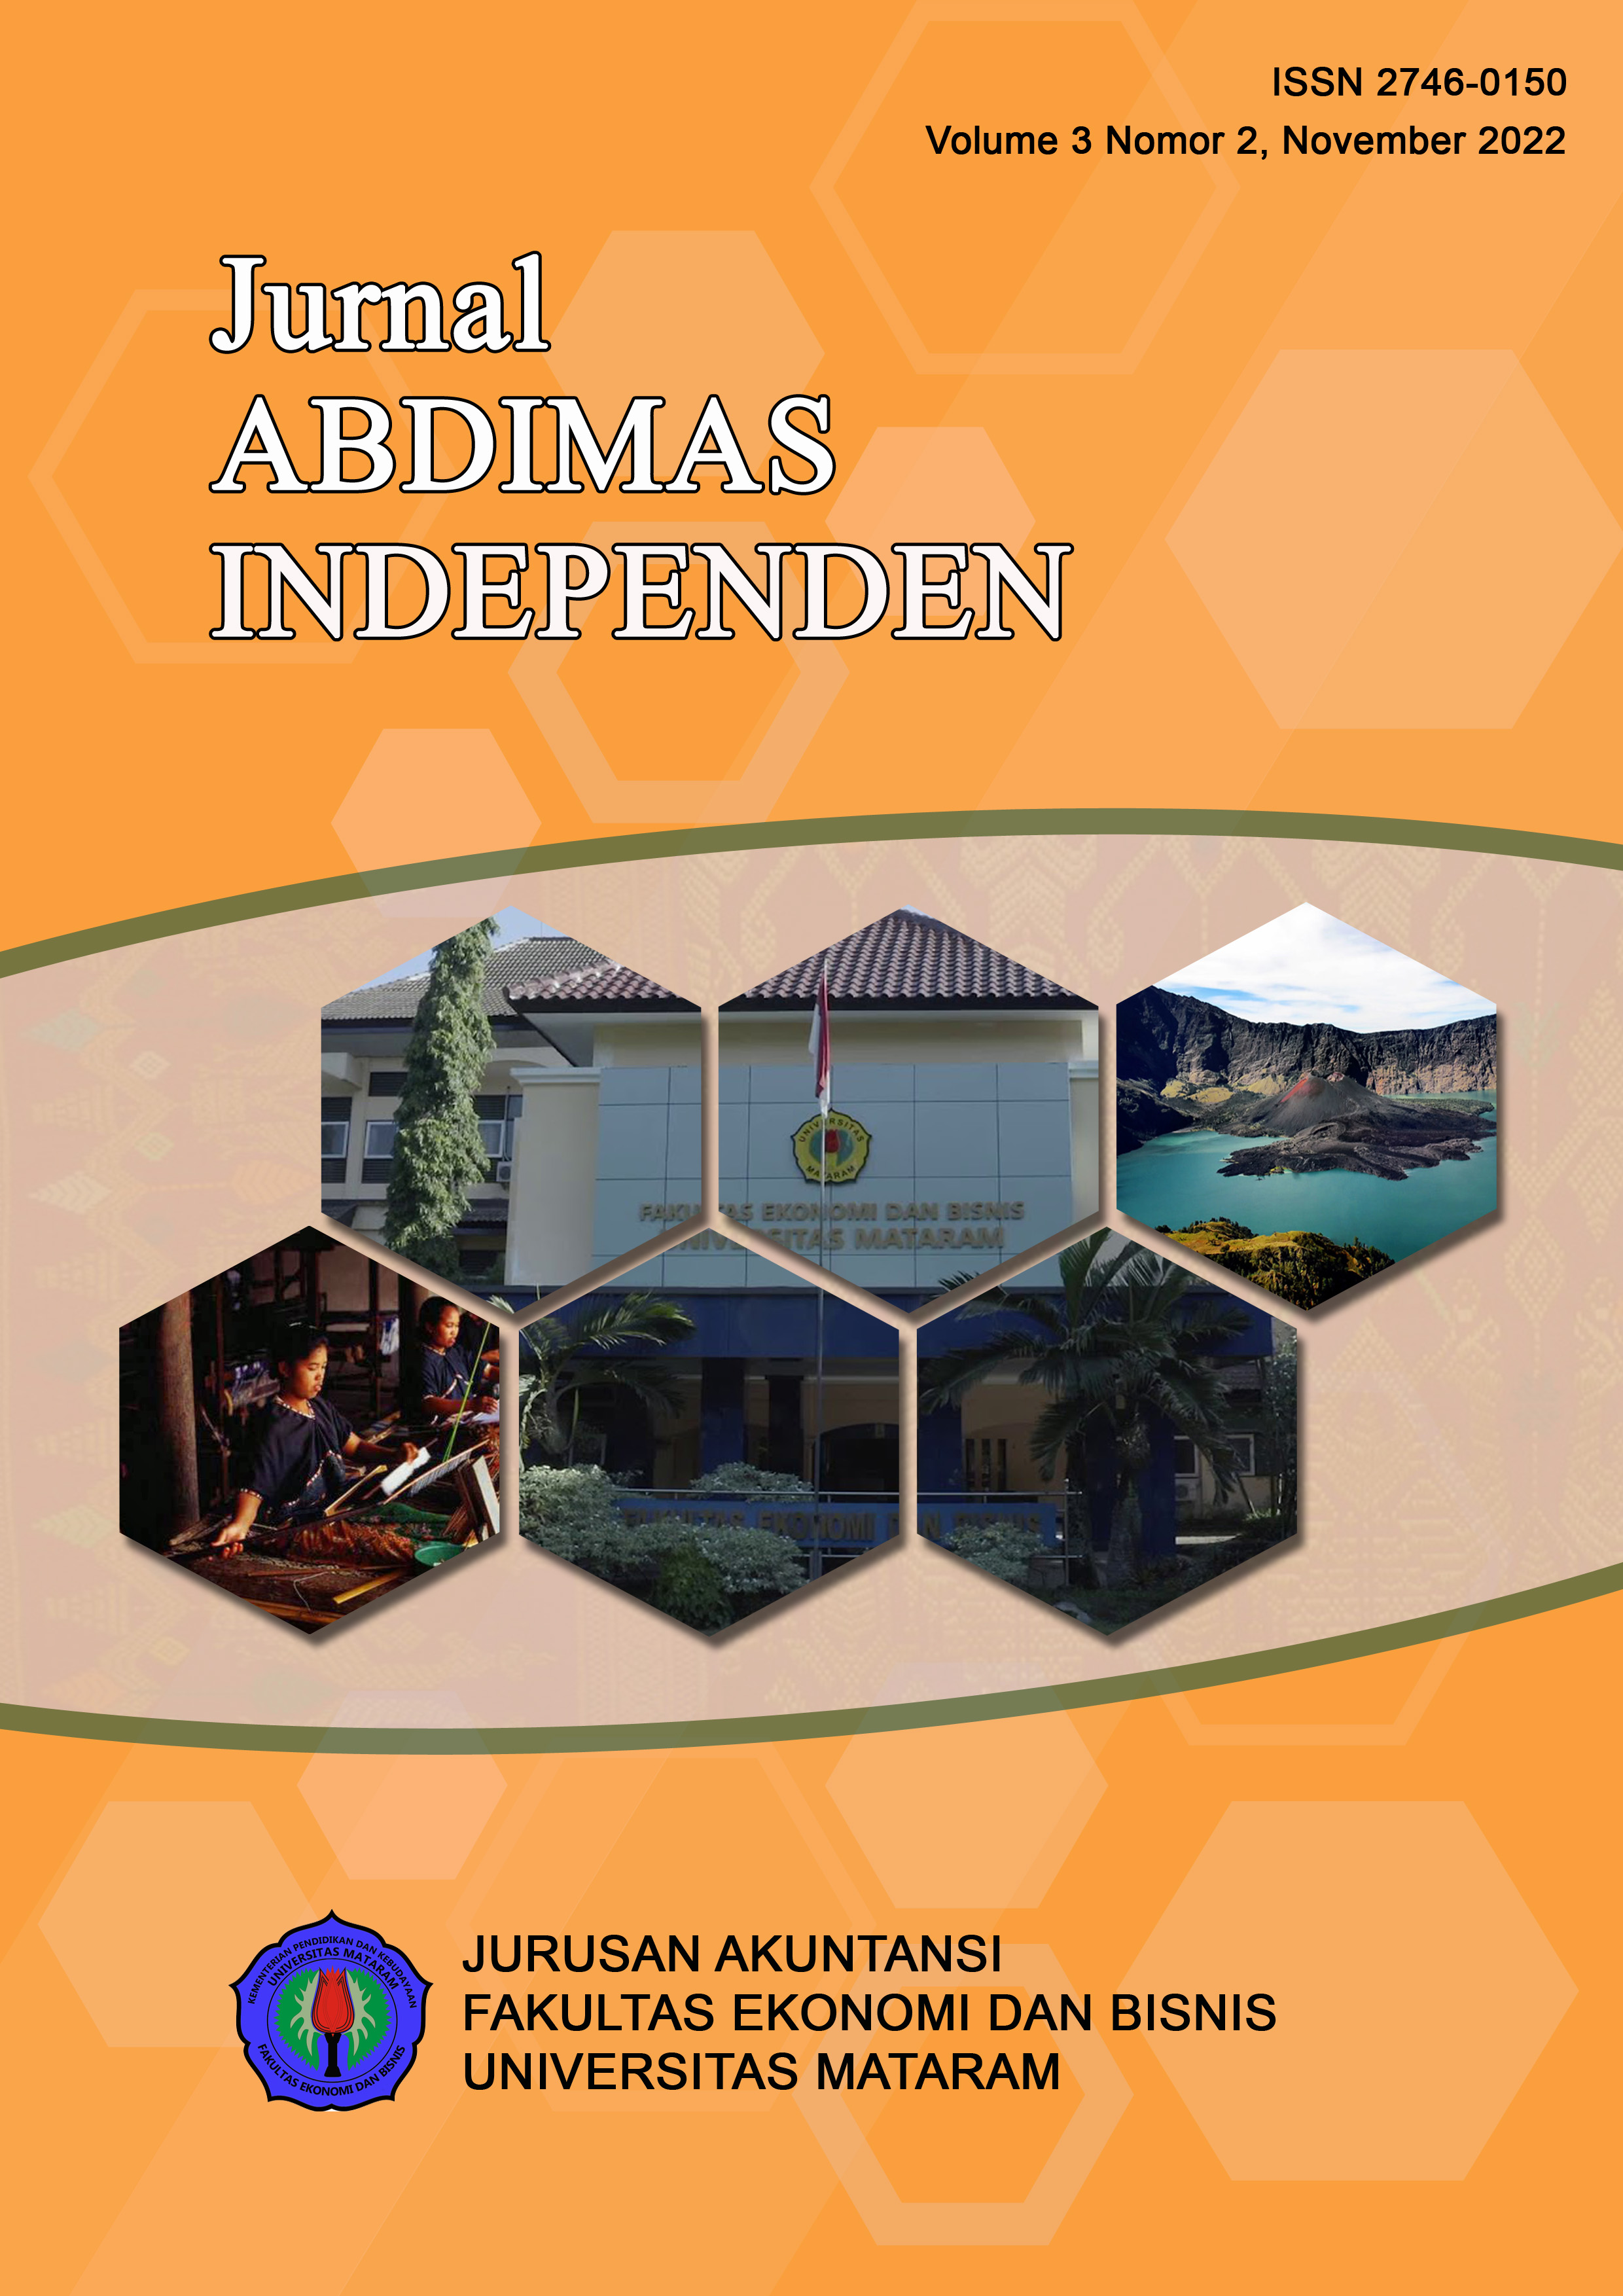 					View Vol. 3 No. 2 (2022): Jurnal Abdimas Independen, November 2022
				